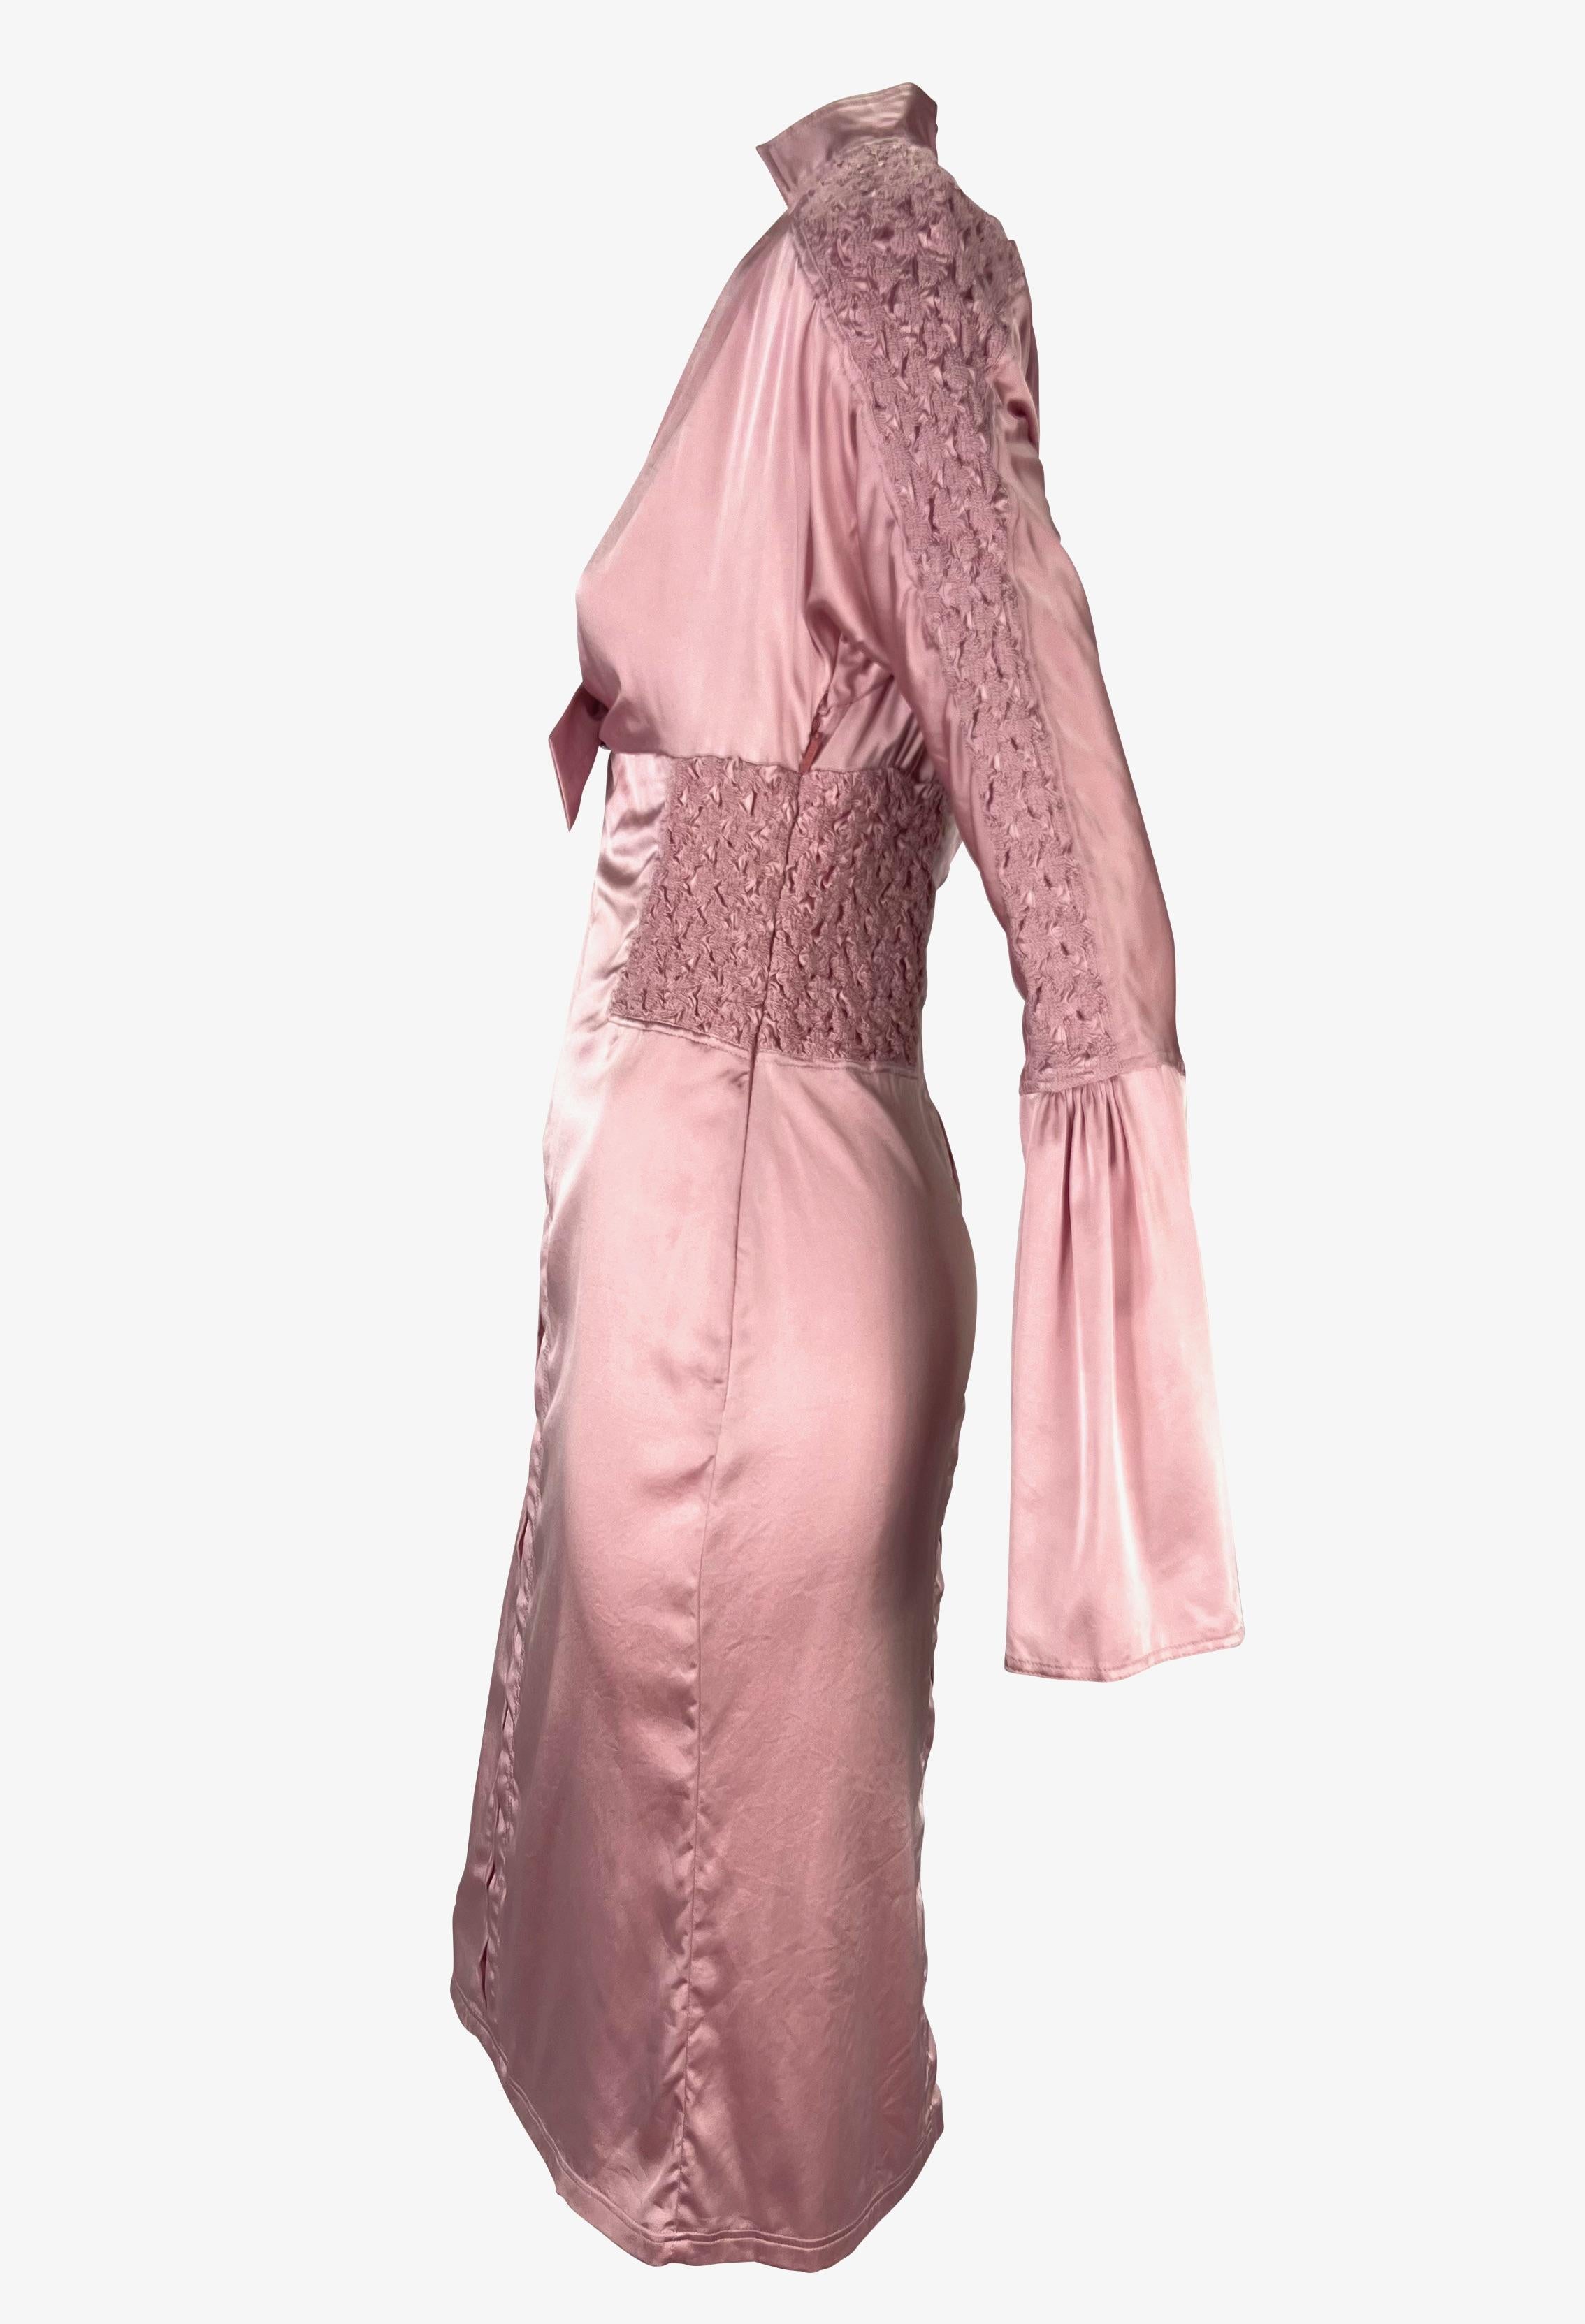 diamante pink dress